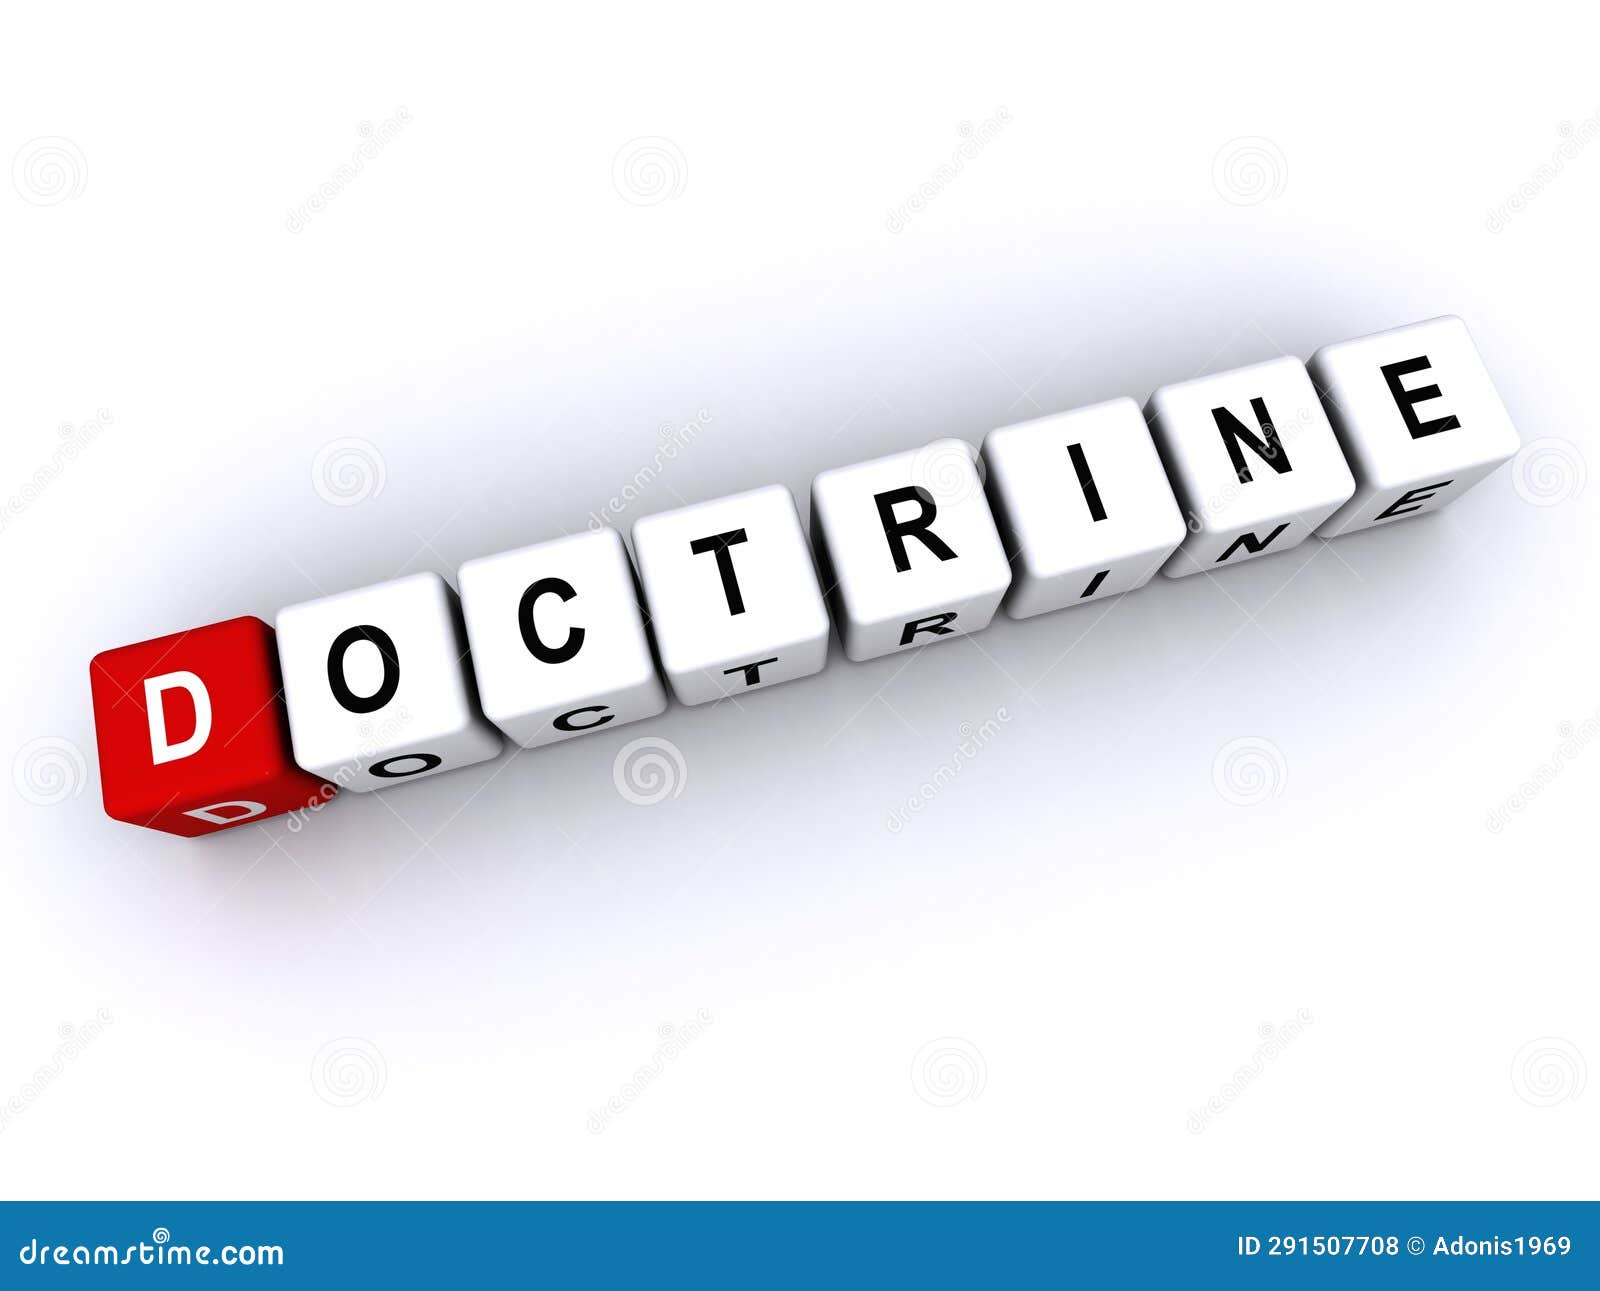 doctrine word block on white